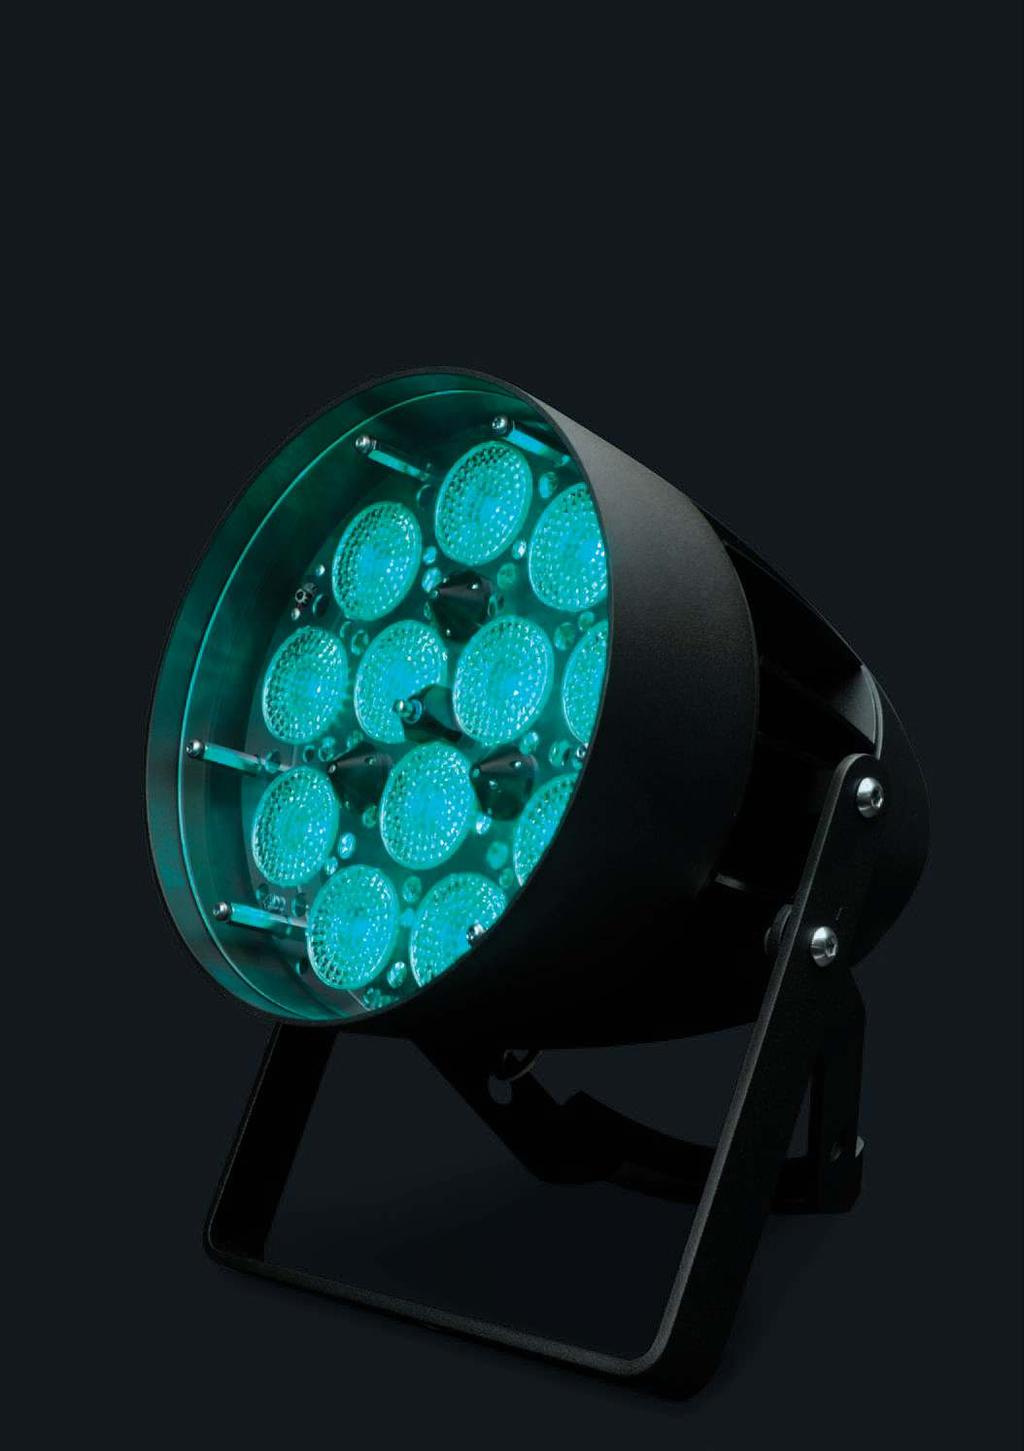 ZOOM LED Spot Market leading colour control and future proofed